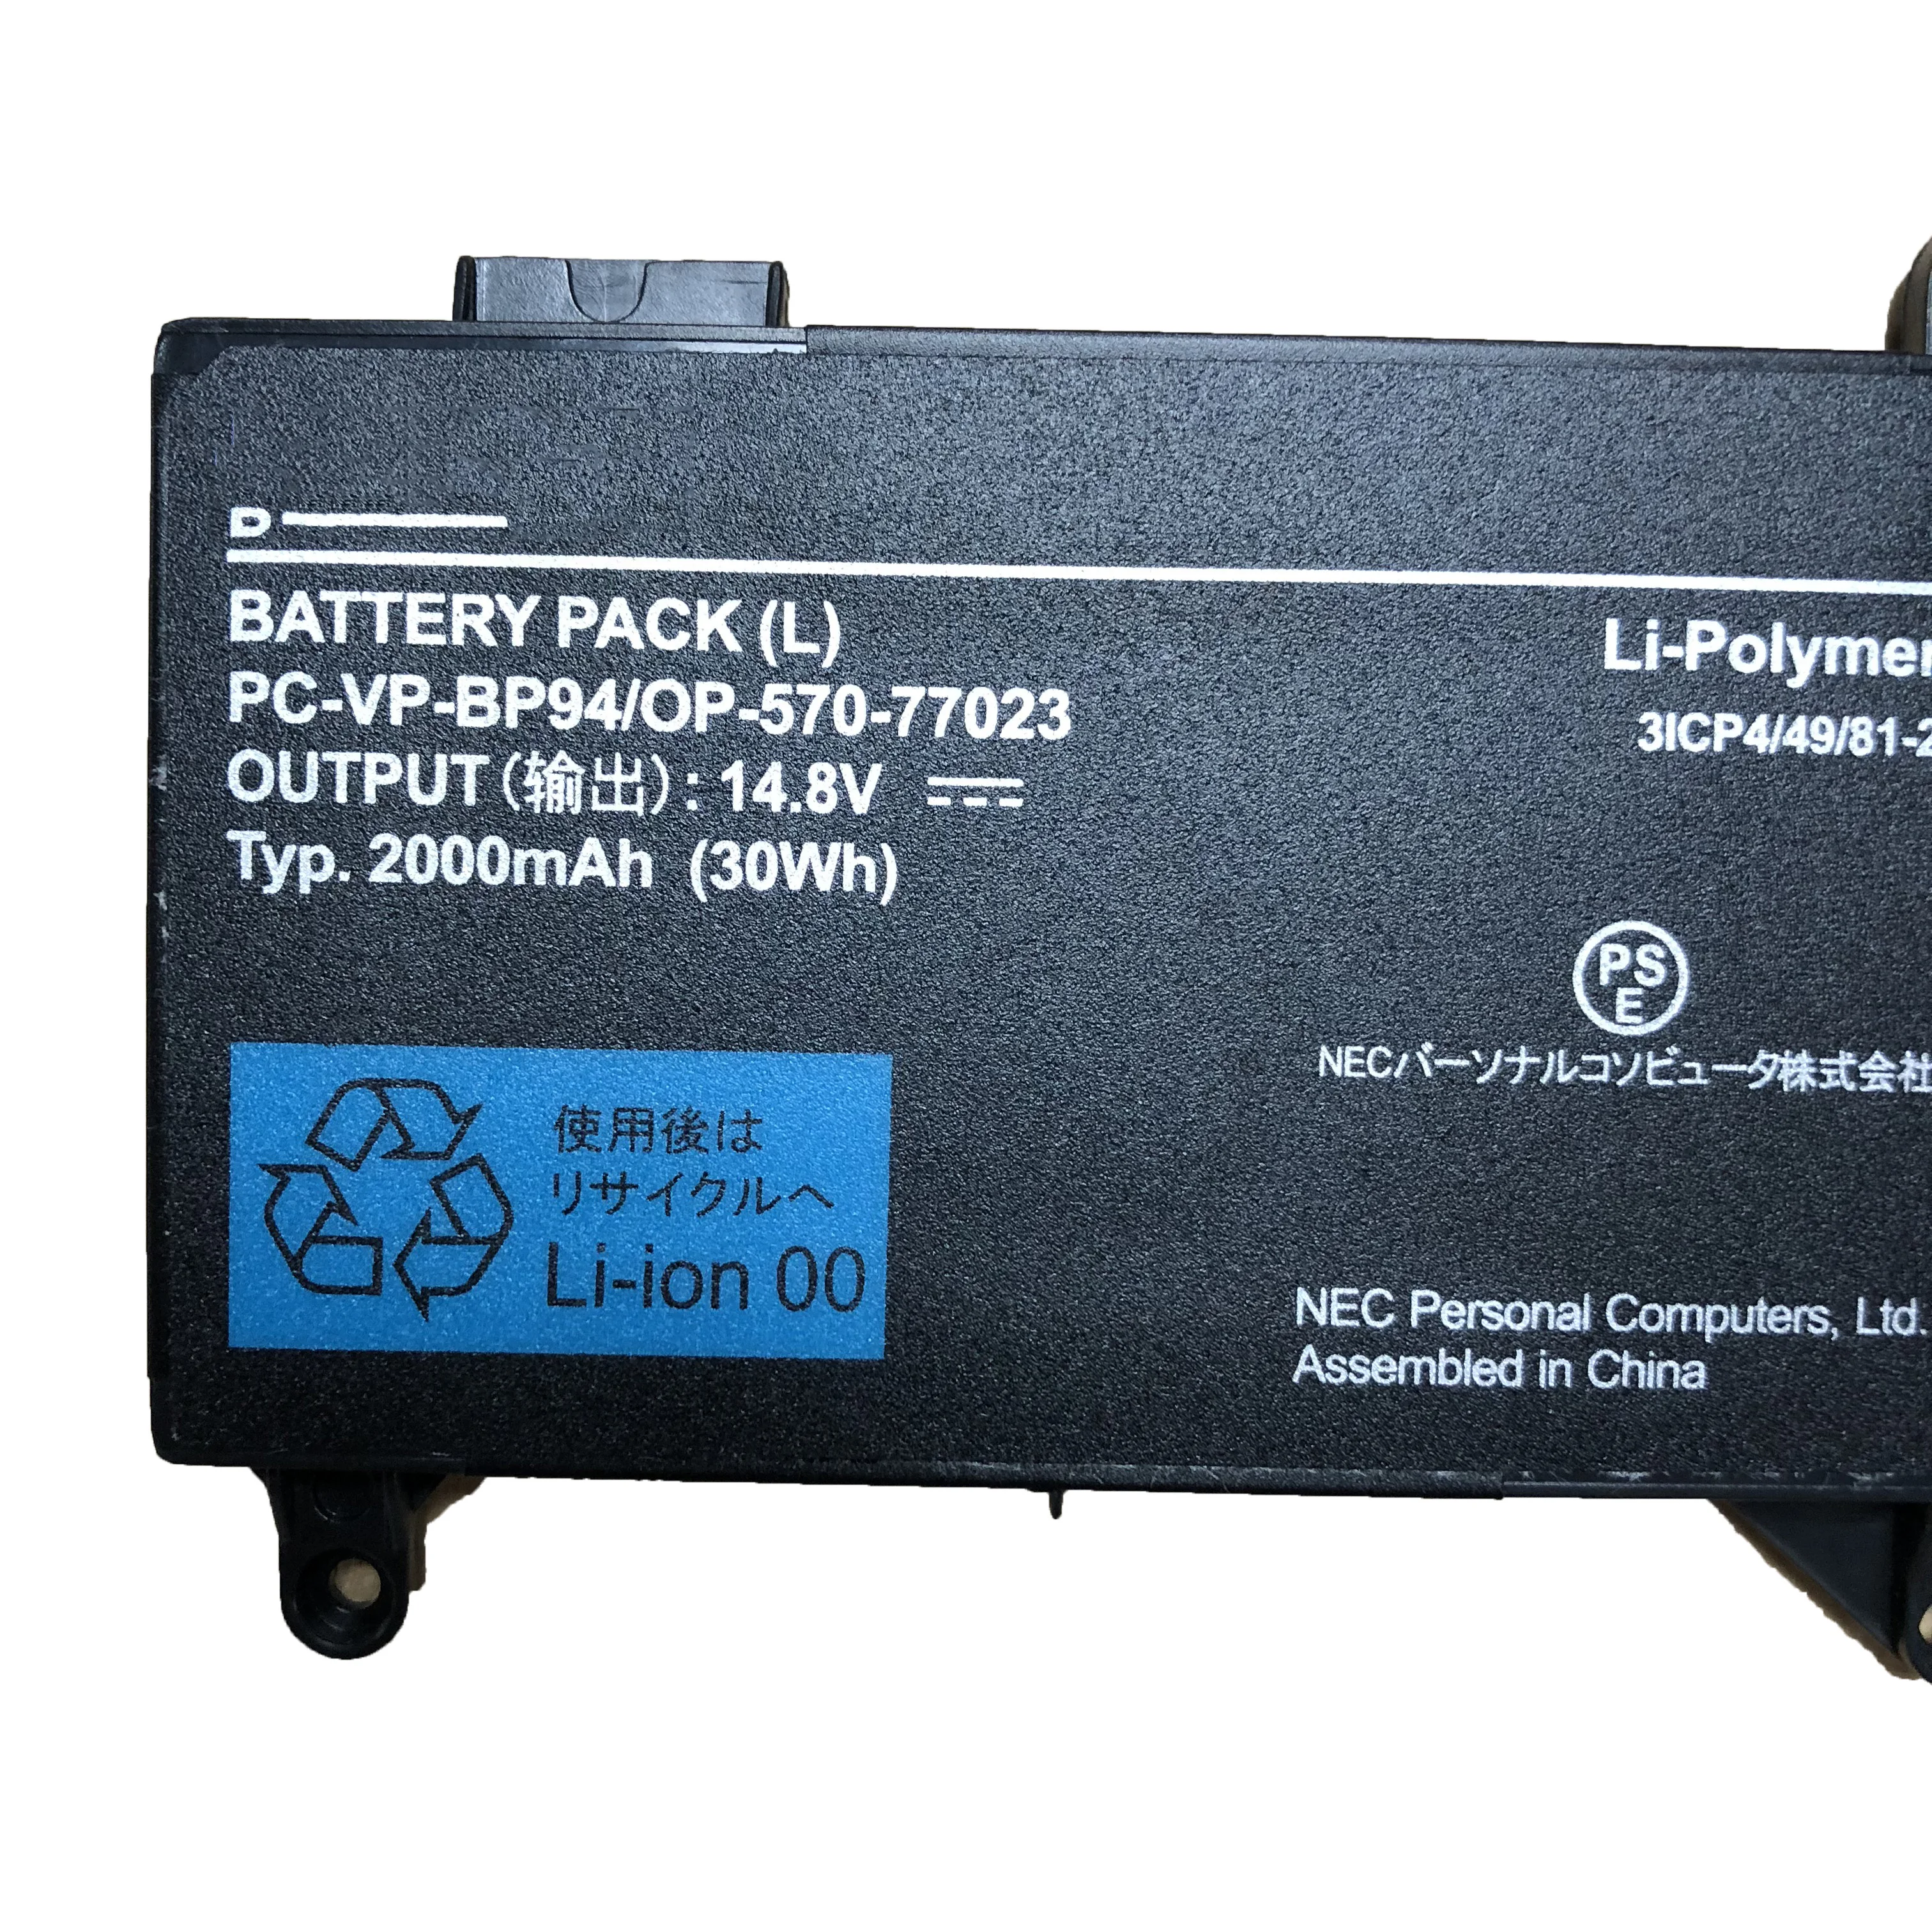 14.8 V 30WH Oprindelige PC-VP-BP94 Laptop Batteri Til LaVie Z LZ750/JS PC-VP-BP94 OP-570-77022